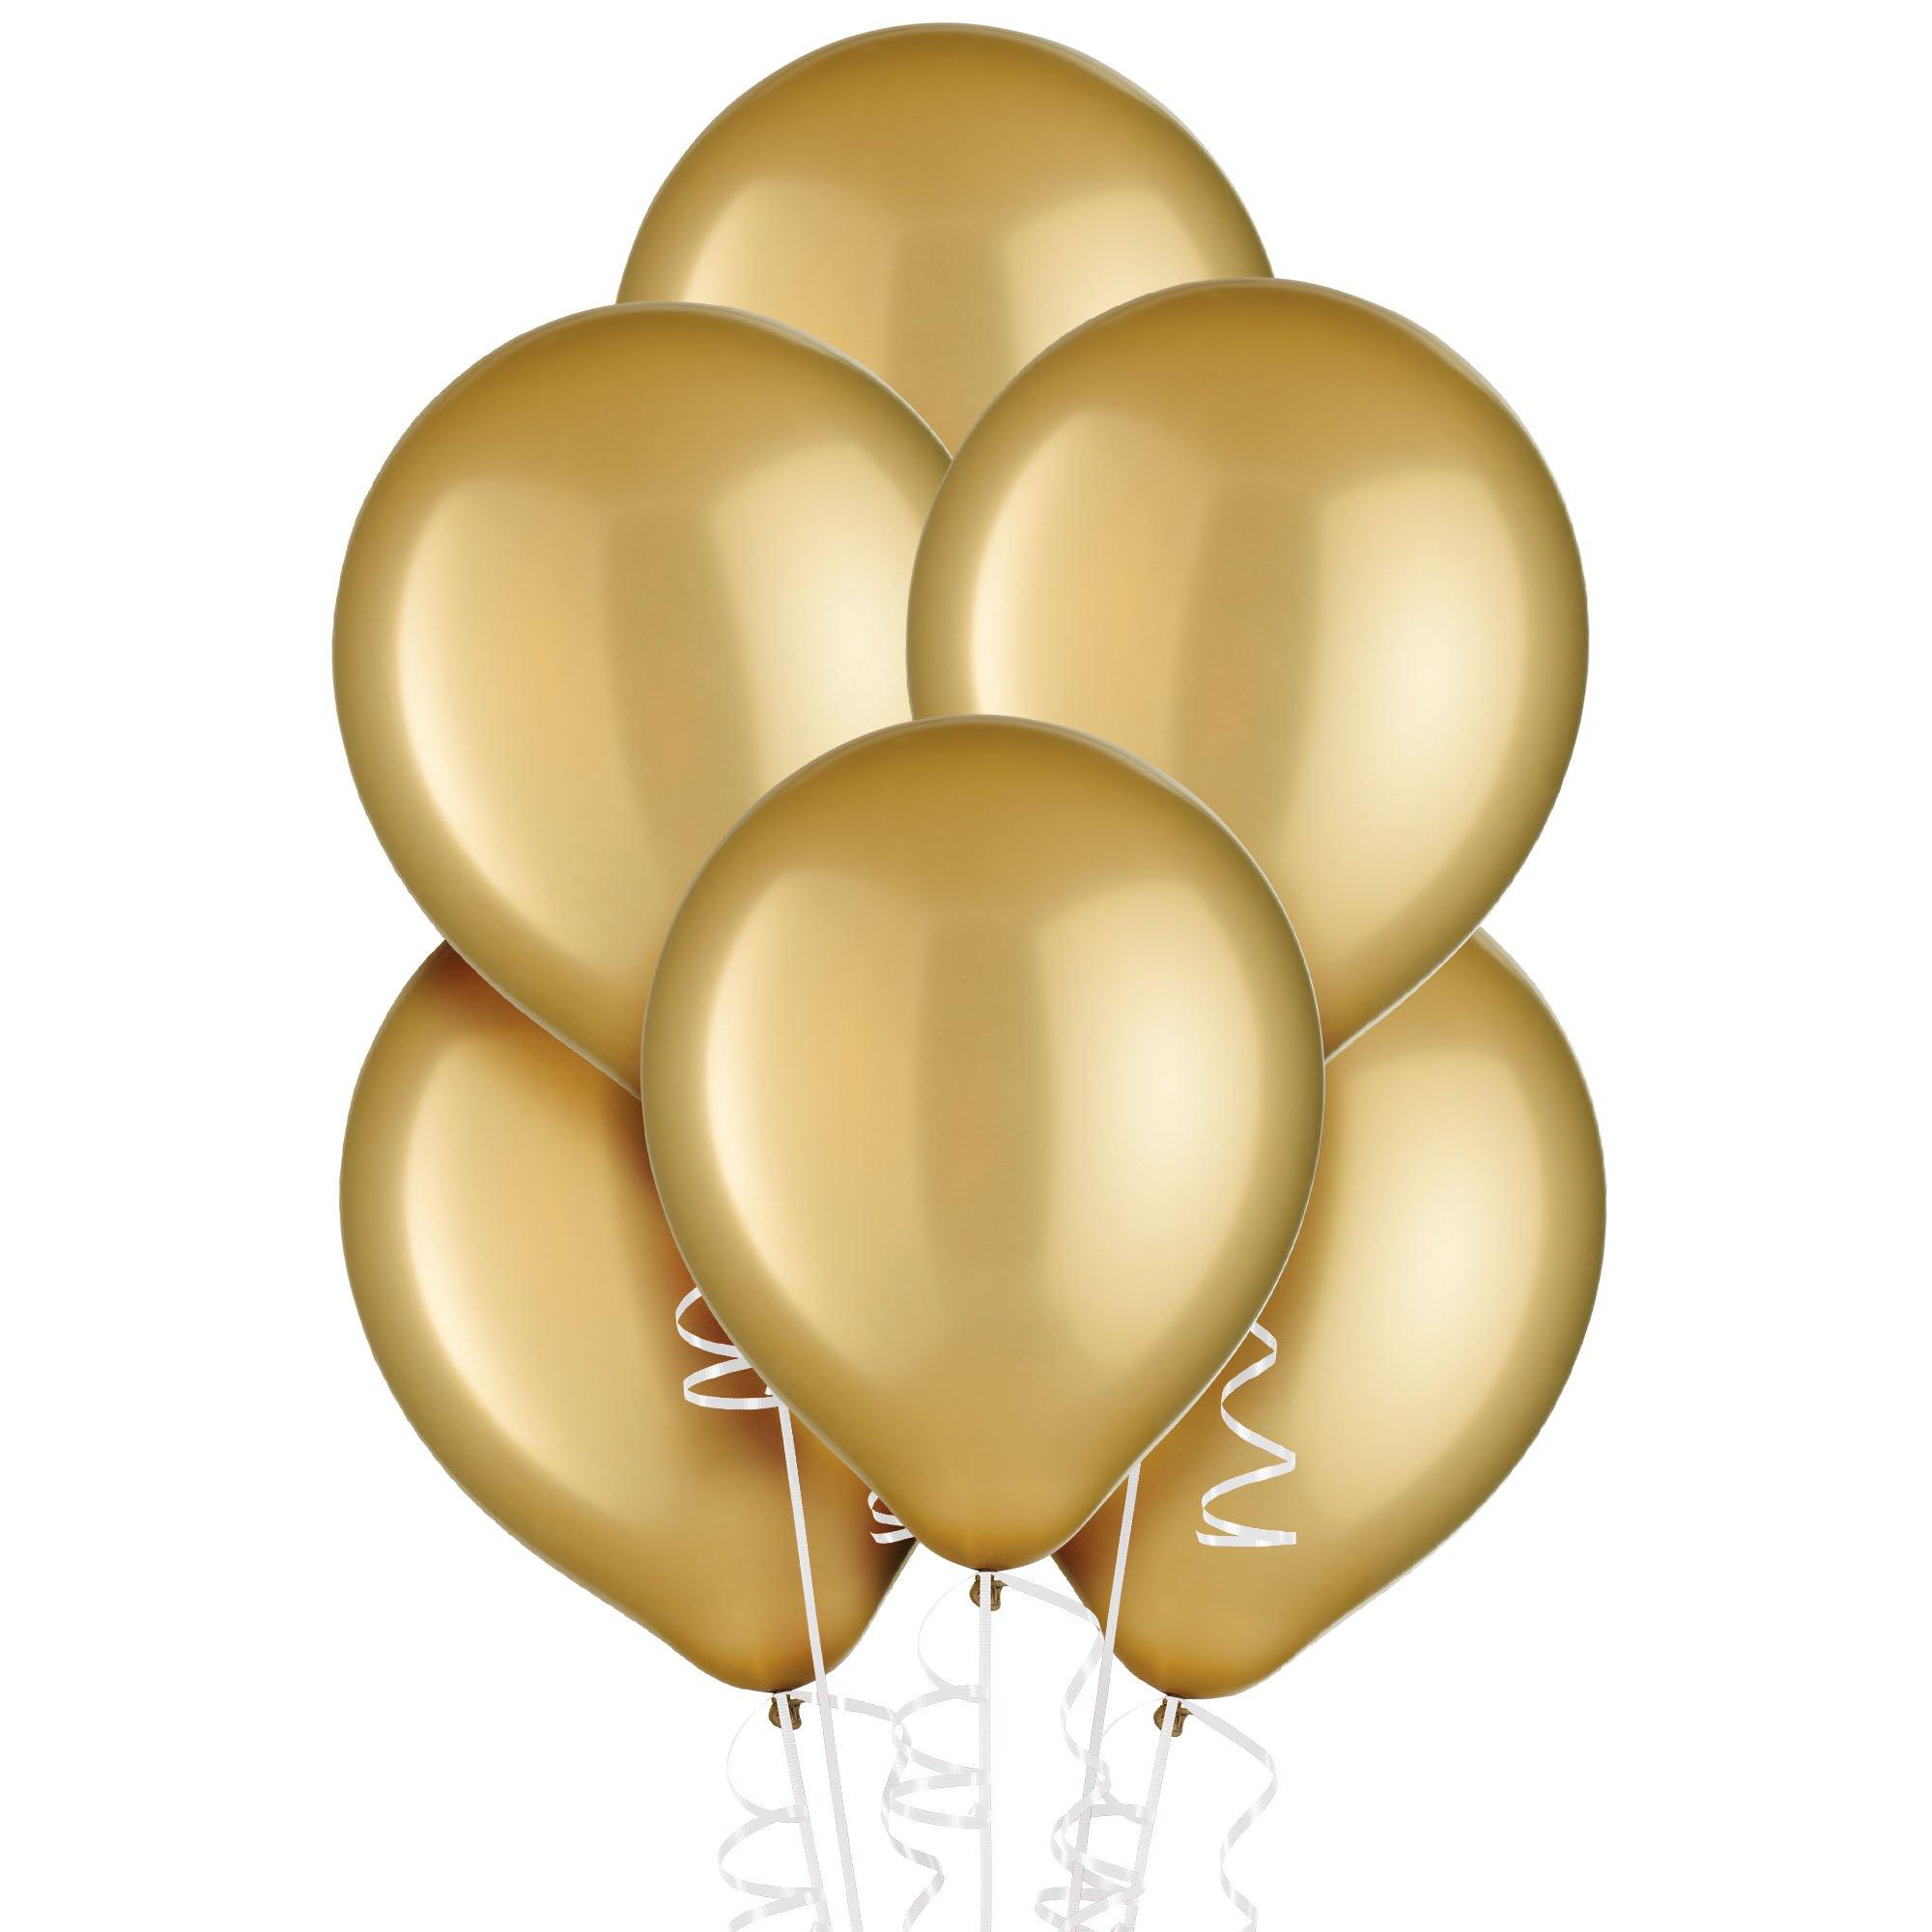 Metallic Gold Dog Balloon Weight